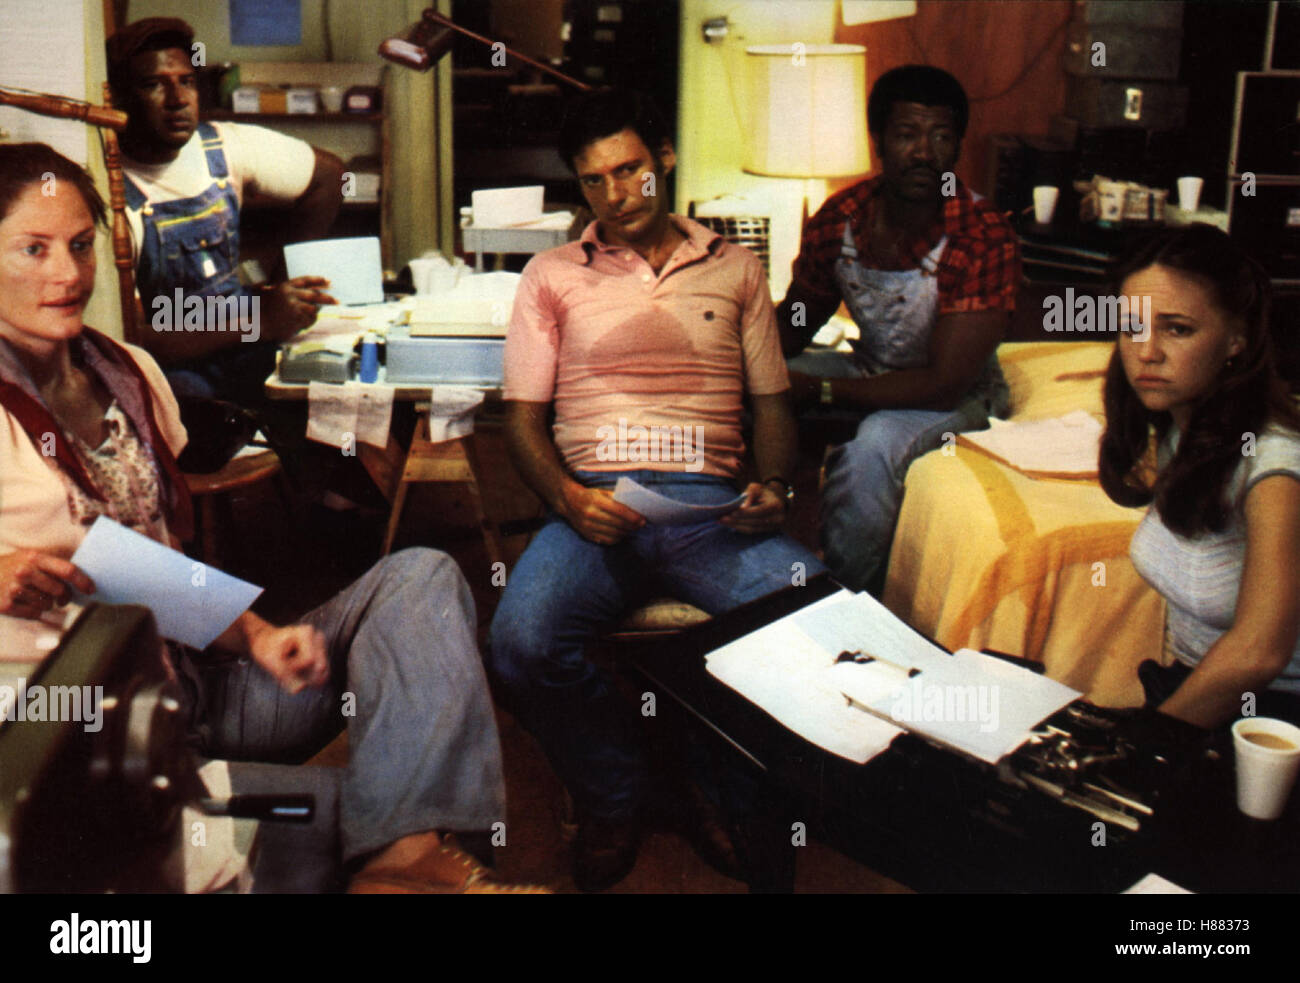 La norma Rae, (NORMA RAE) USA 1979, Regie: Martin Ritt, RON LEIBMAN (mi), Sally Field (RE) Foto Stock